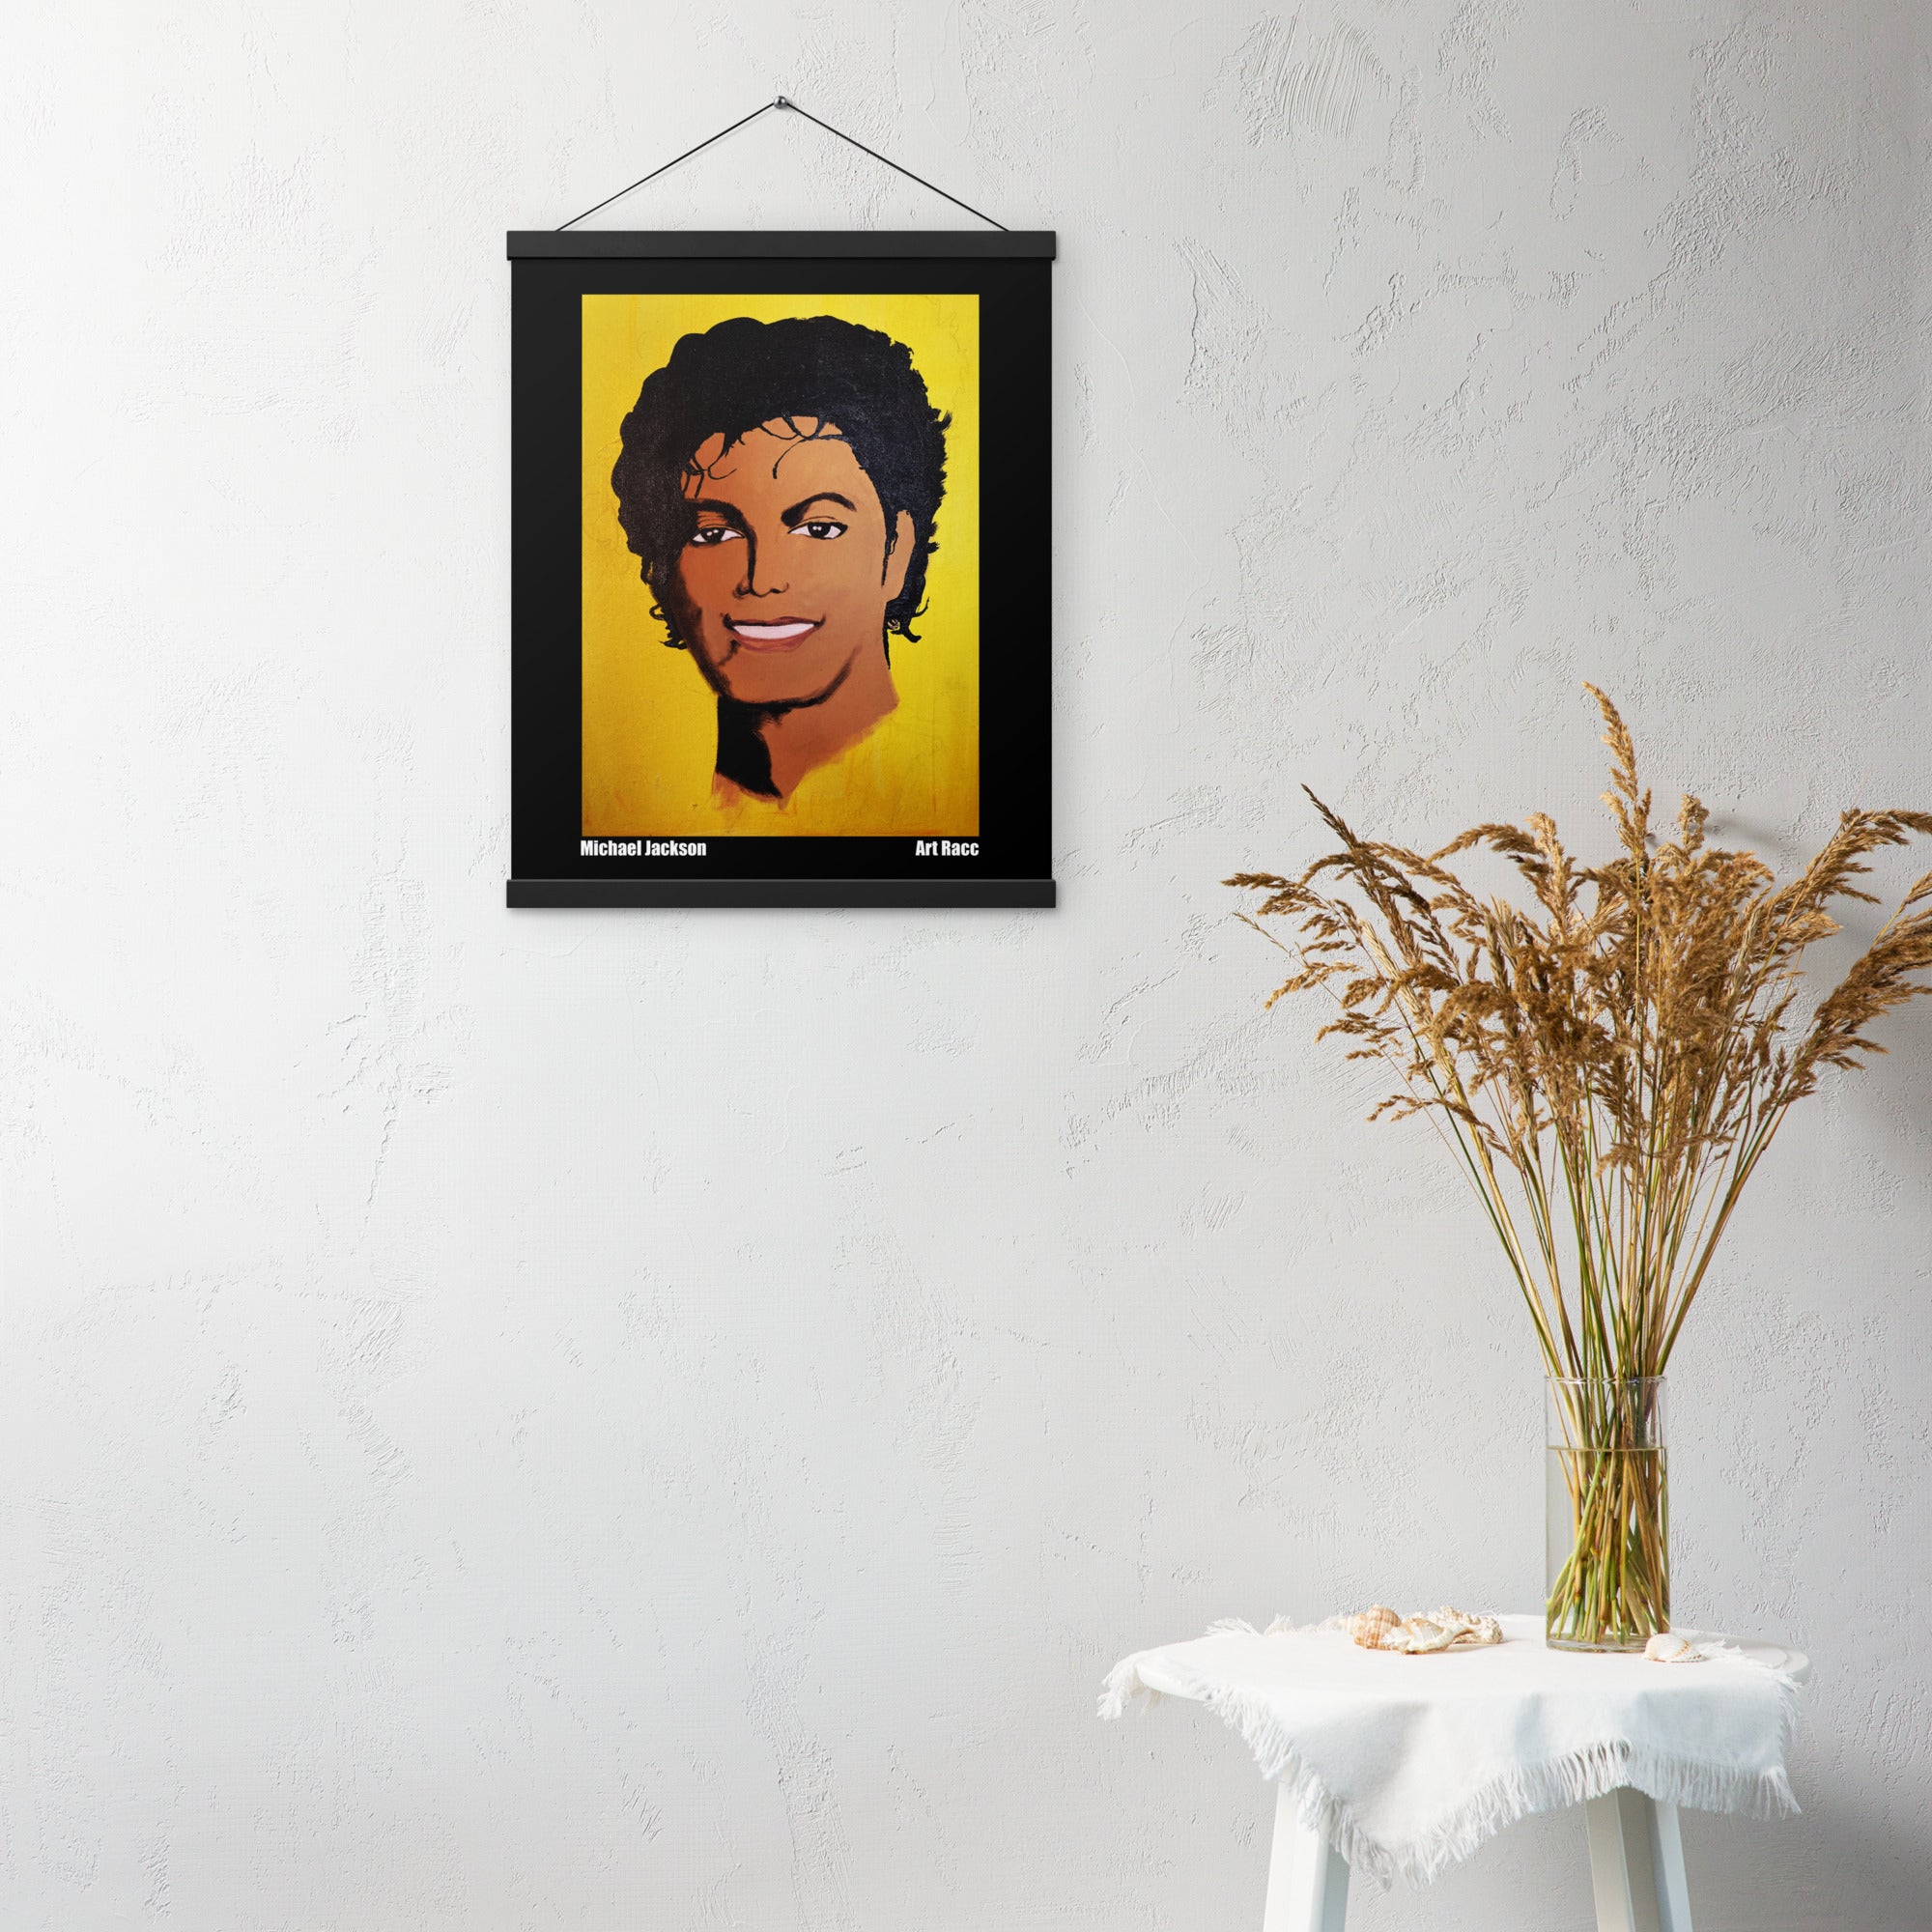 Michael Jackson by Art Racc Poster